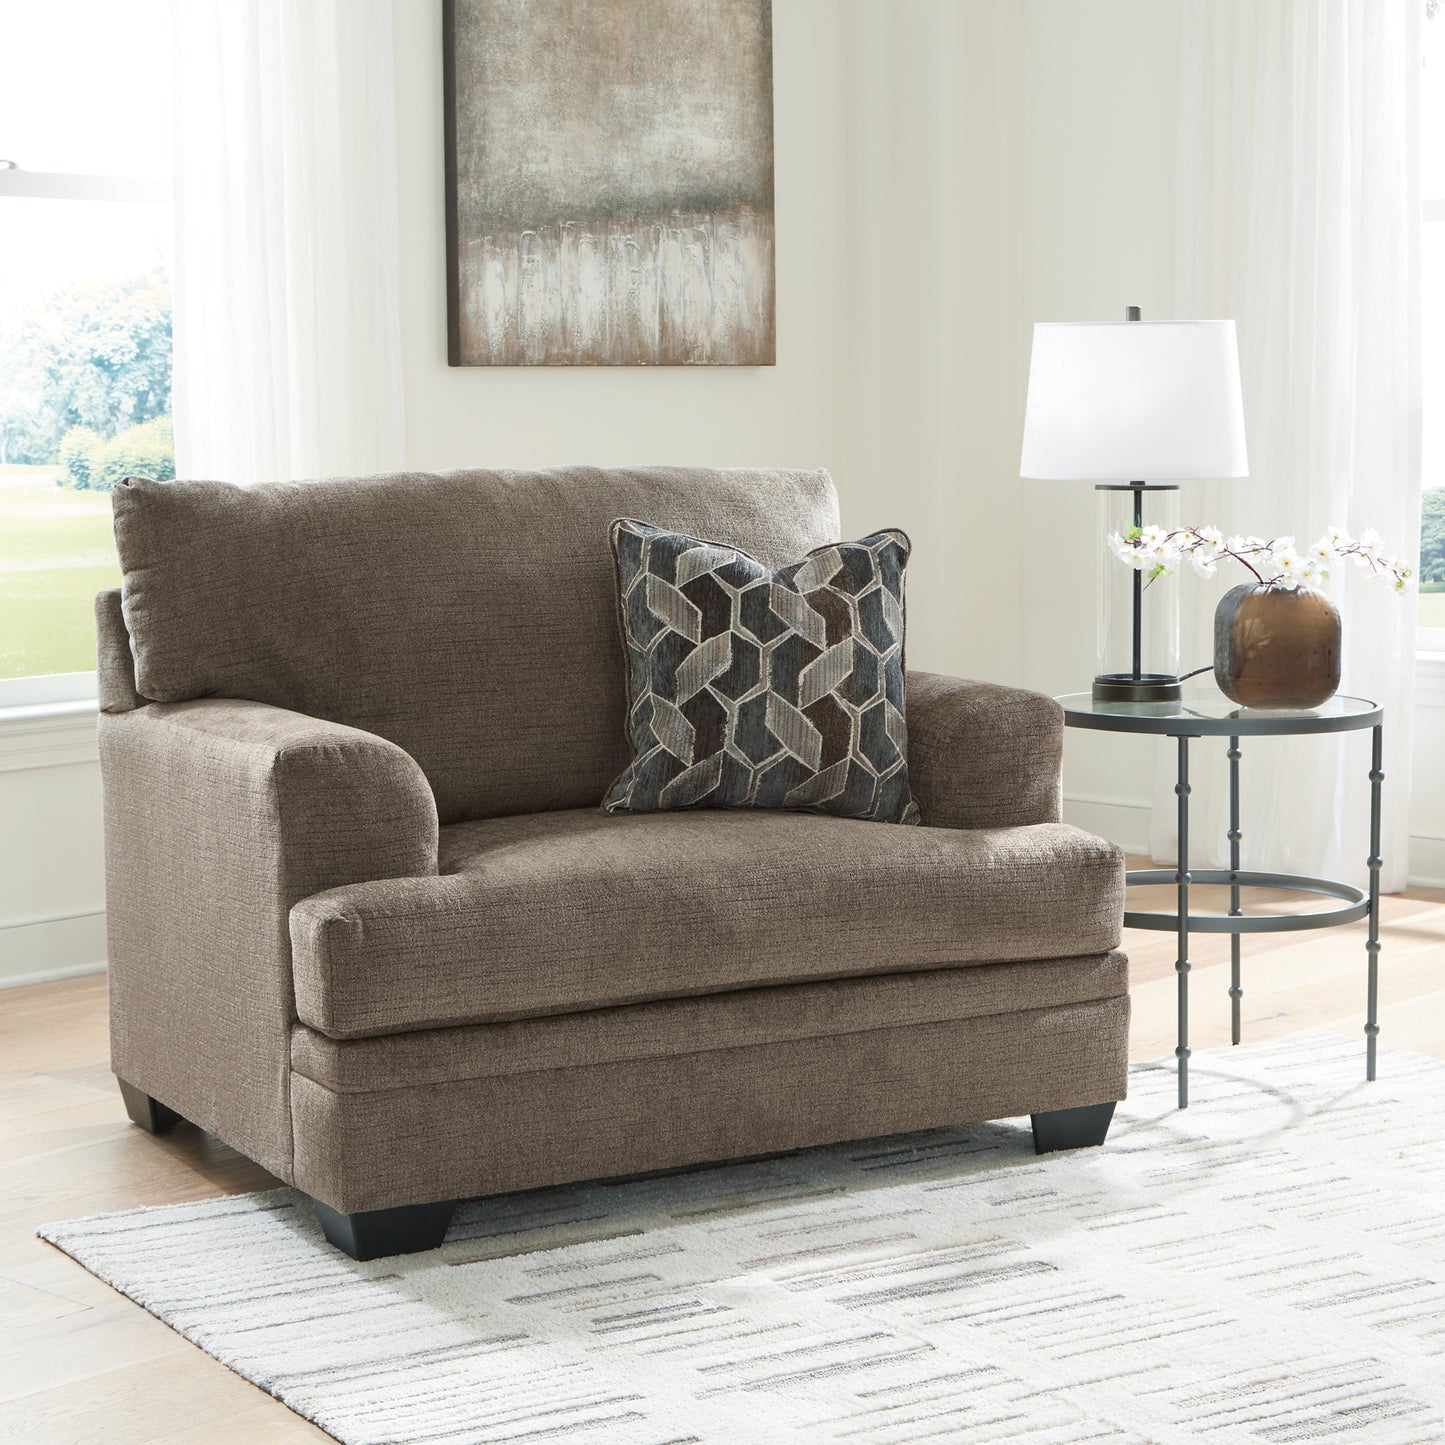 Stonemeade Sofa, Loveseat, Chair and Ottoman